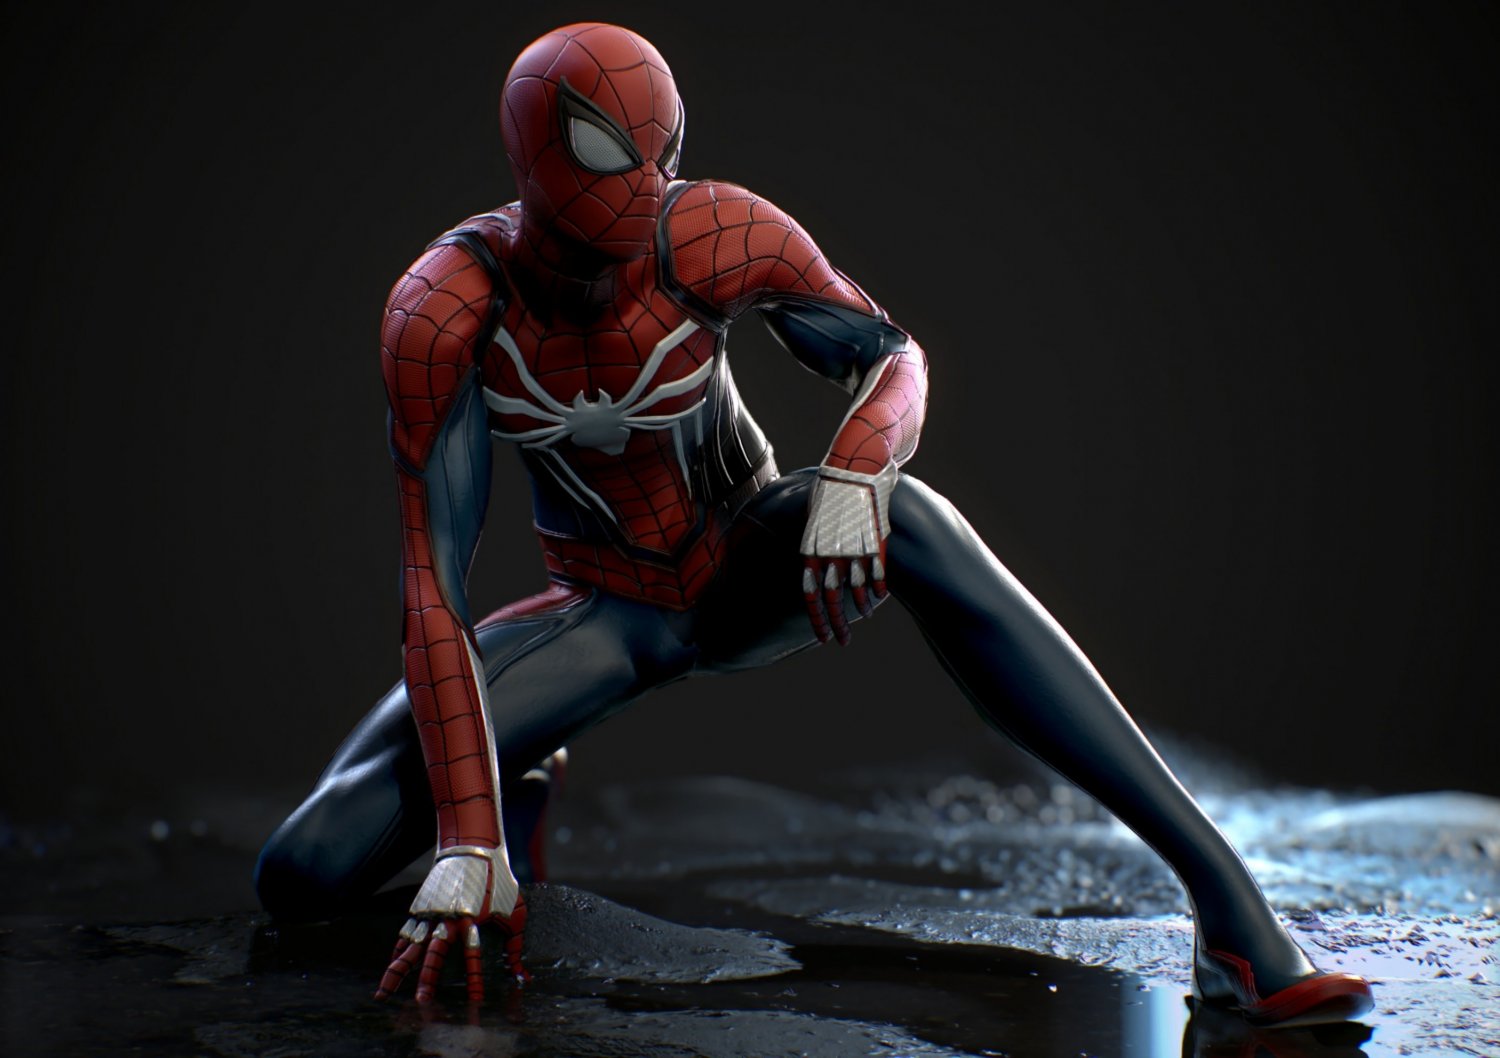 PC / Computer - Spider-Man: Web of Shadows - Venom - The Models Resource